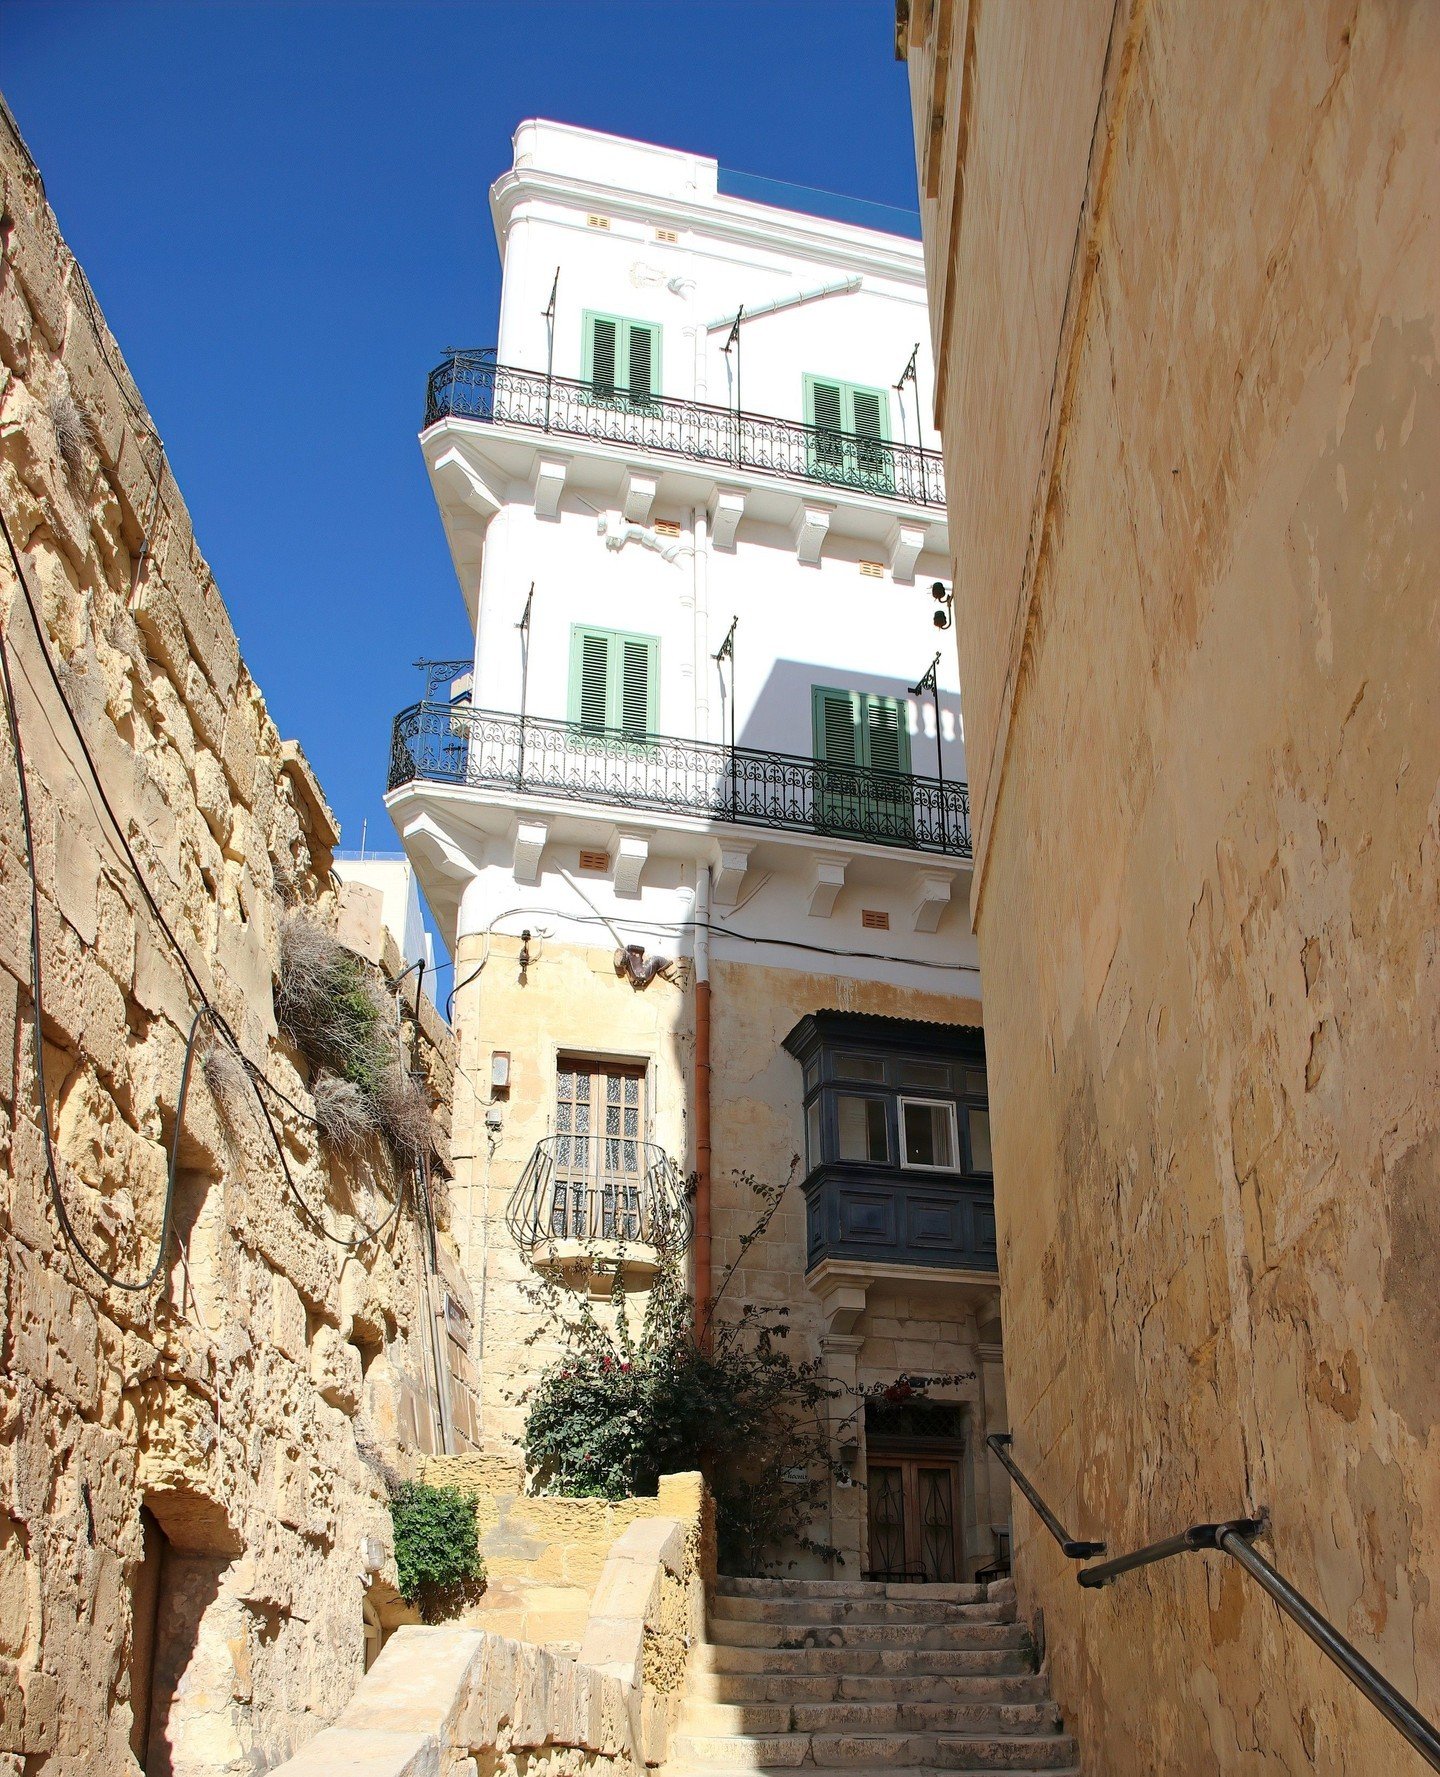 Valletta - Malta's capital city 🌍⁠
⁠⁠
Photographer: Scott Duffield⁠
IG: scott.duffield.photography⁠
FB: www.facebook.com/Scott.duffield.photography⁠
WB: www.scottduffieldphotography.pixieset.com/⁠
Publication: @worldencounter⁠
⁠
👉🏻 Purchase our Pr